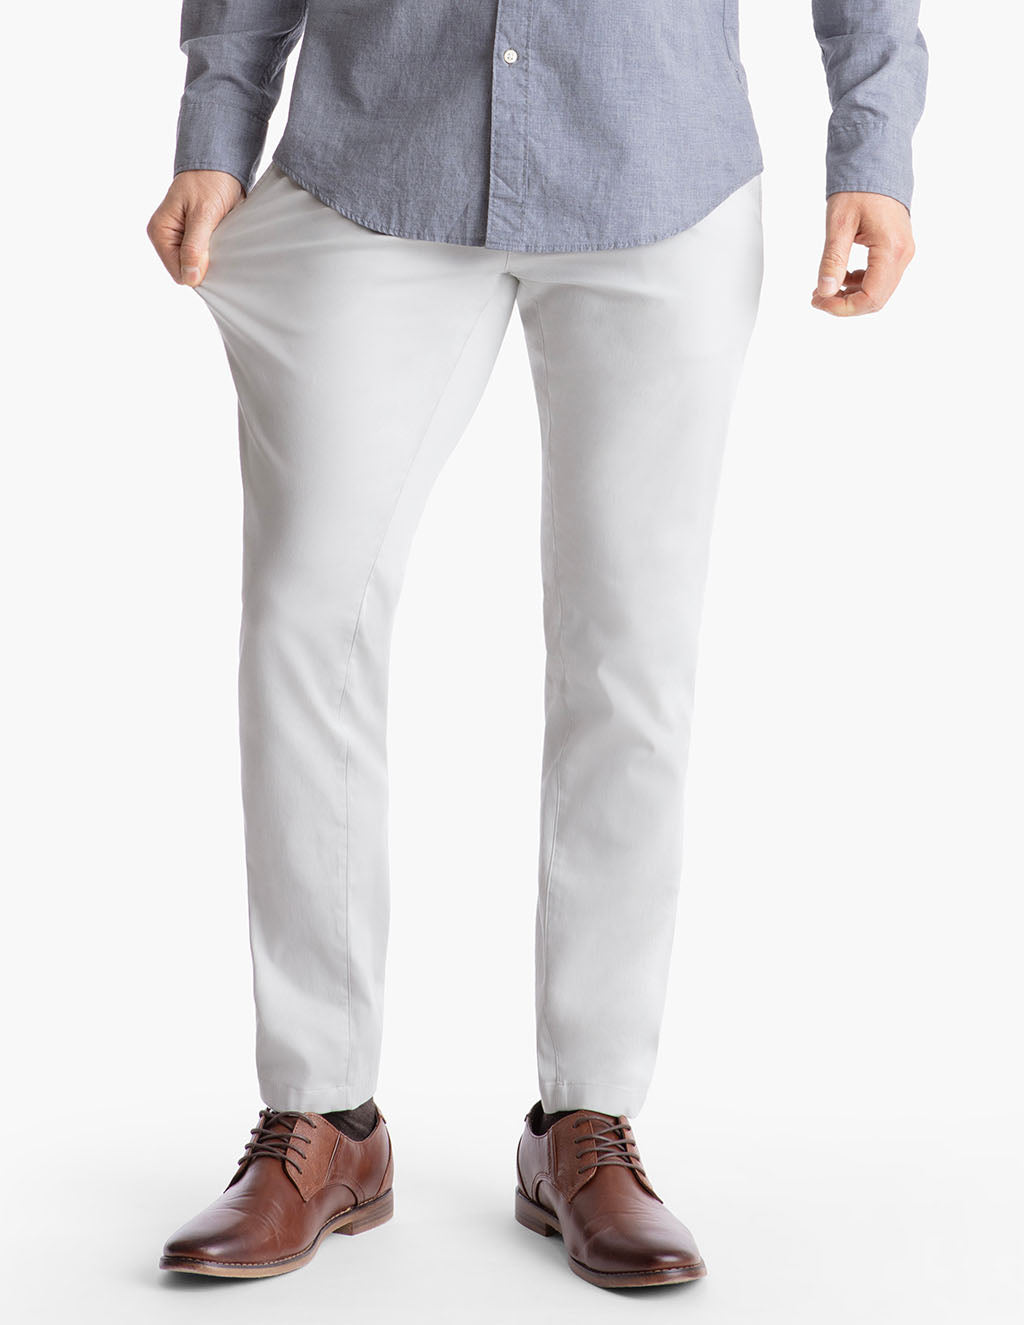 Vintage Gap Pants Fits Mens 34 x 30 Beige Khaki Outdoors – Proper